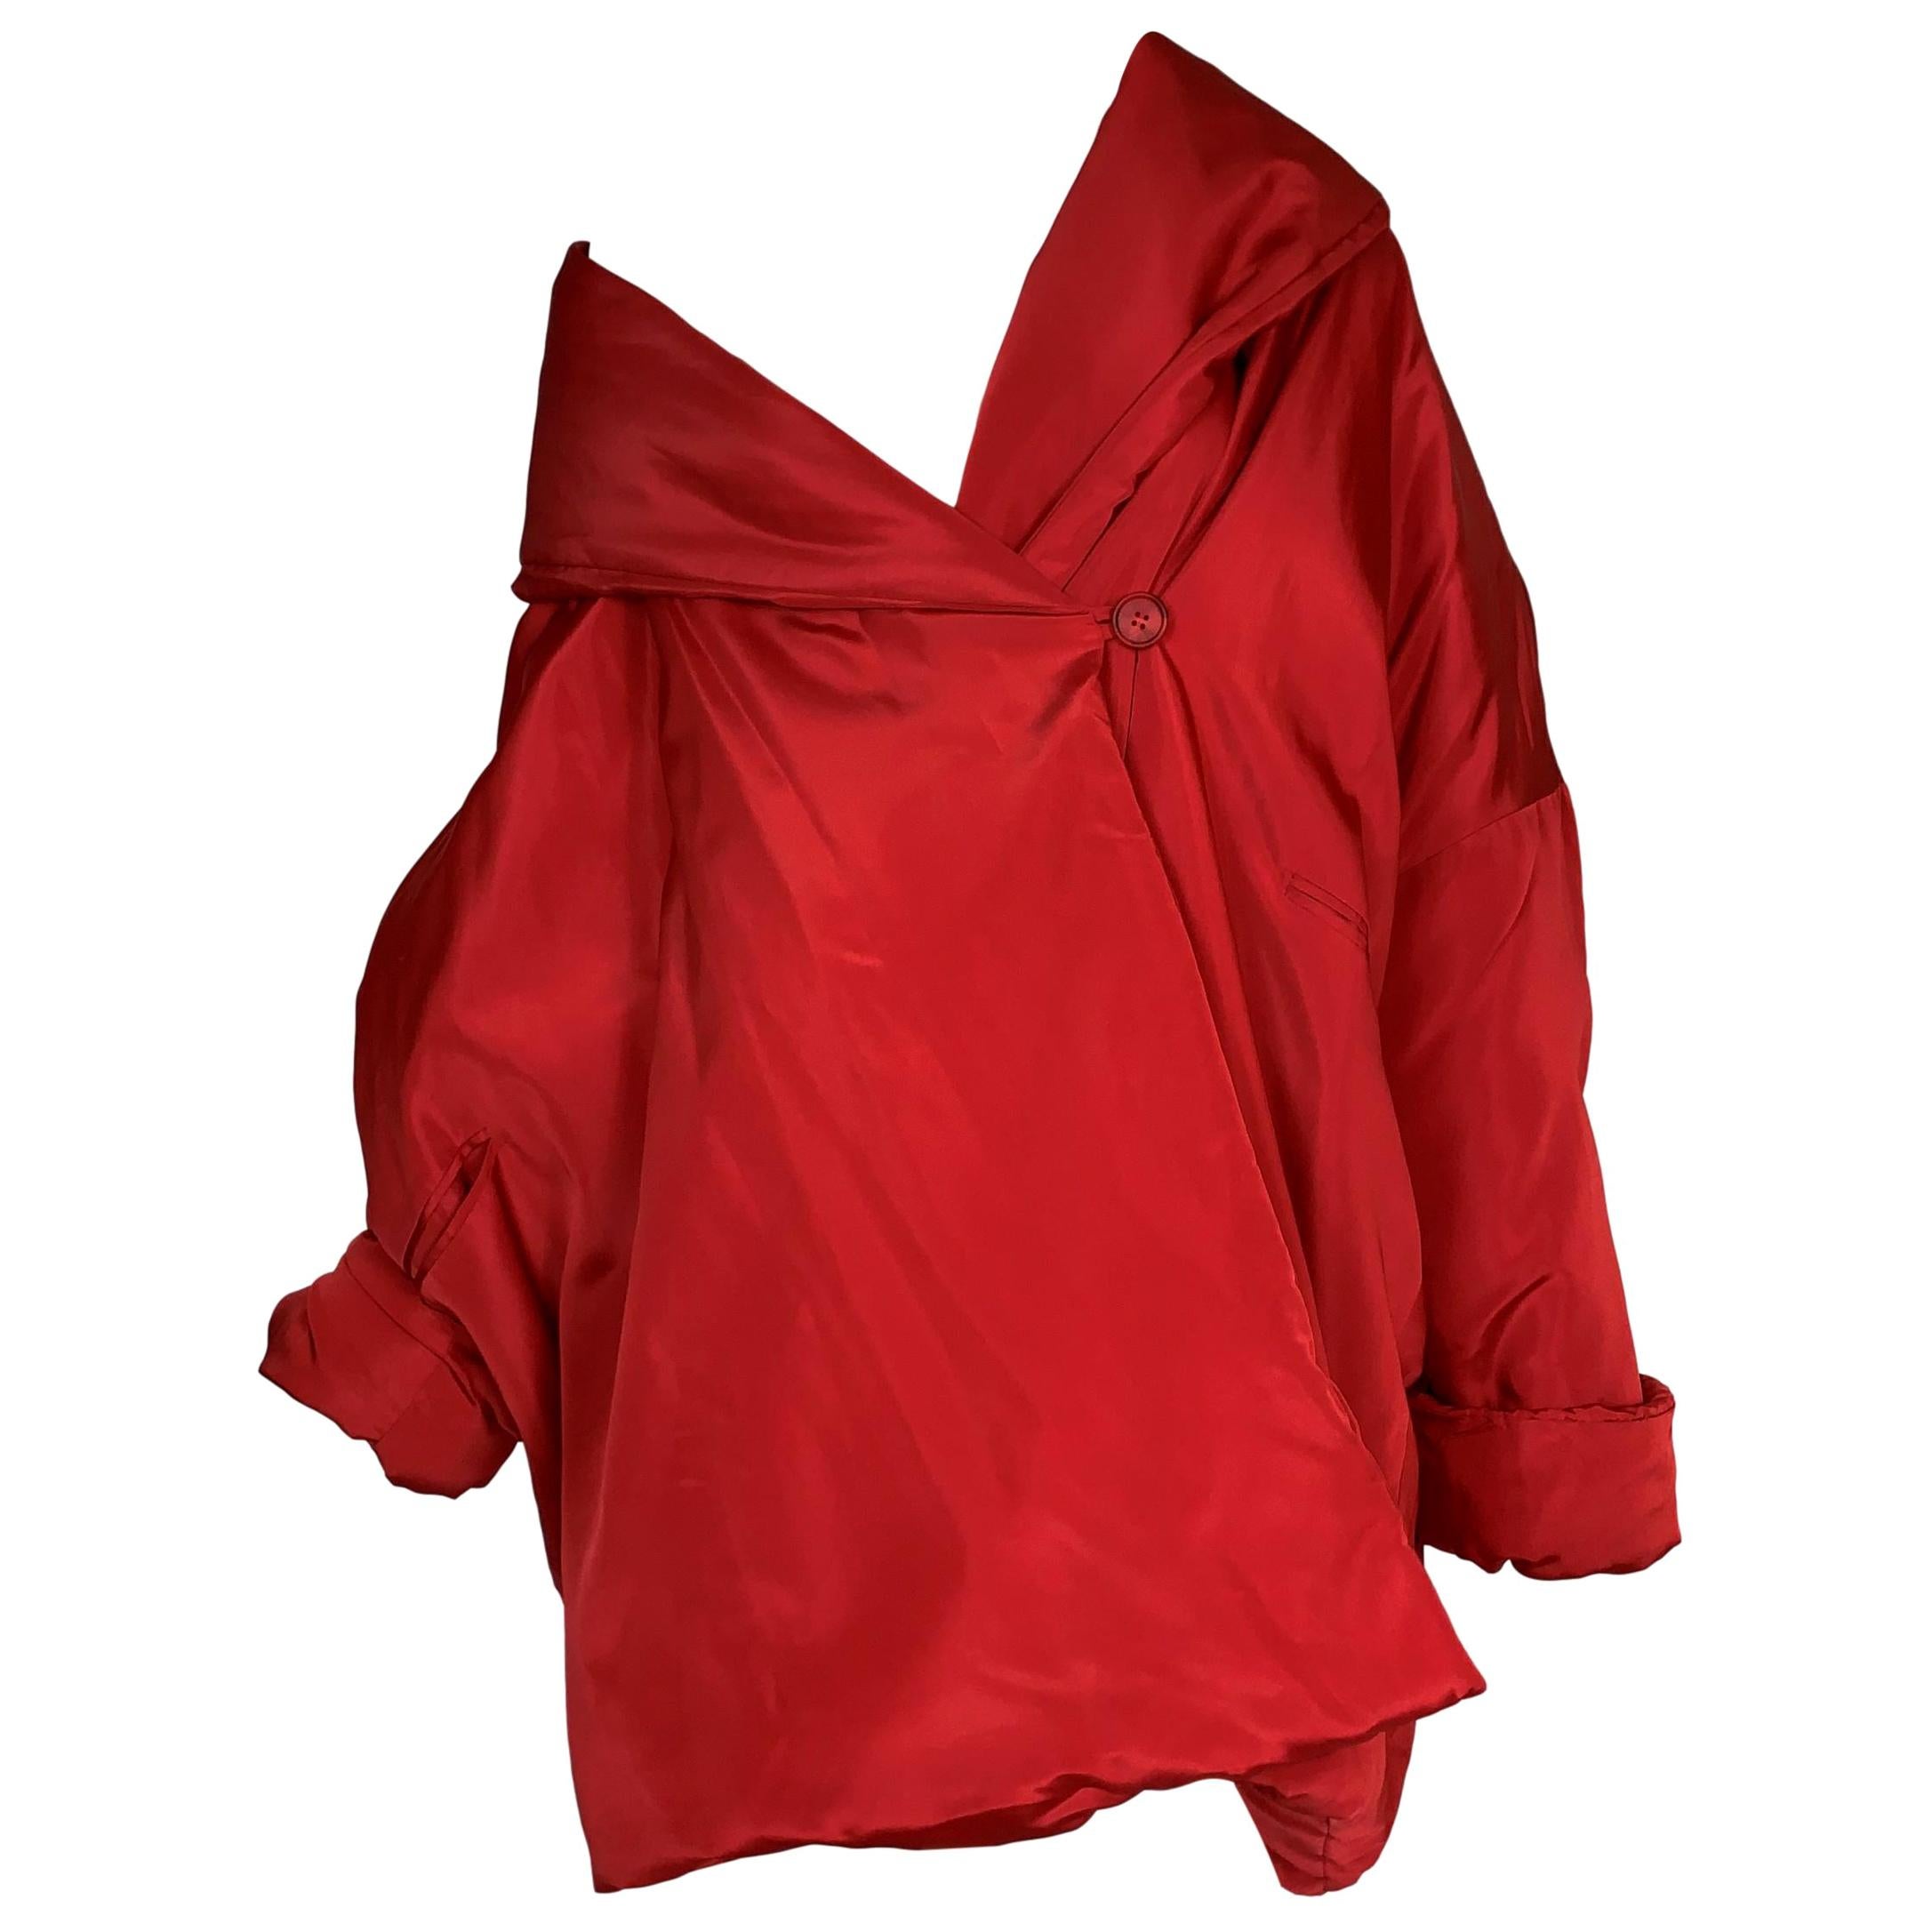 Vintage 1991 Dolce & Gabbana Red Satin Puffy Opera Coat Jacket